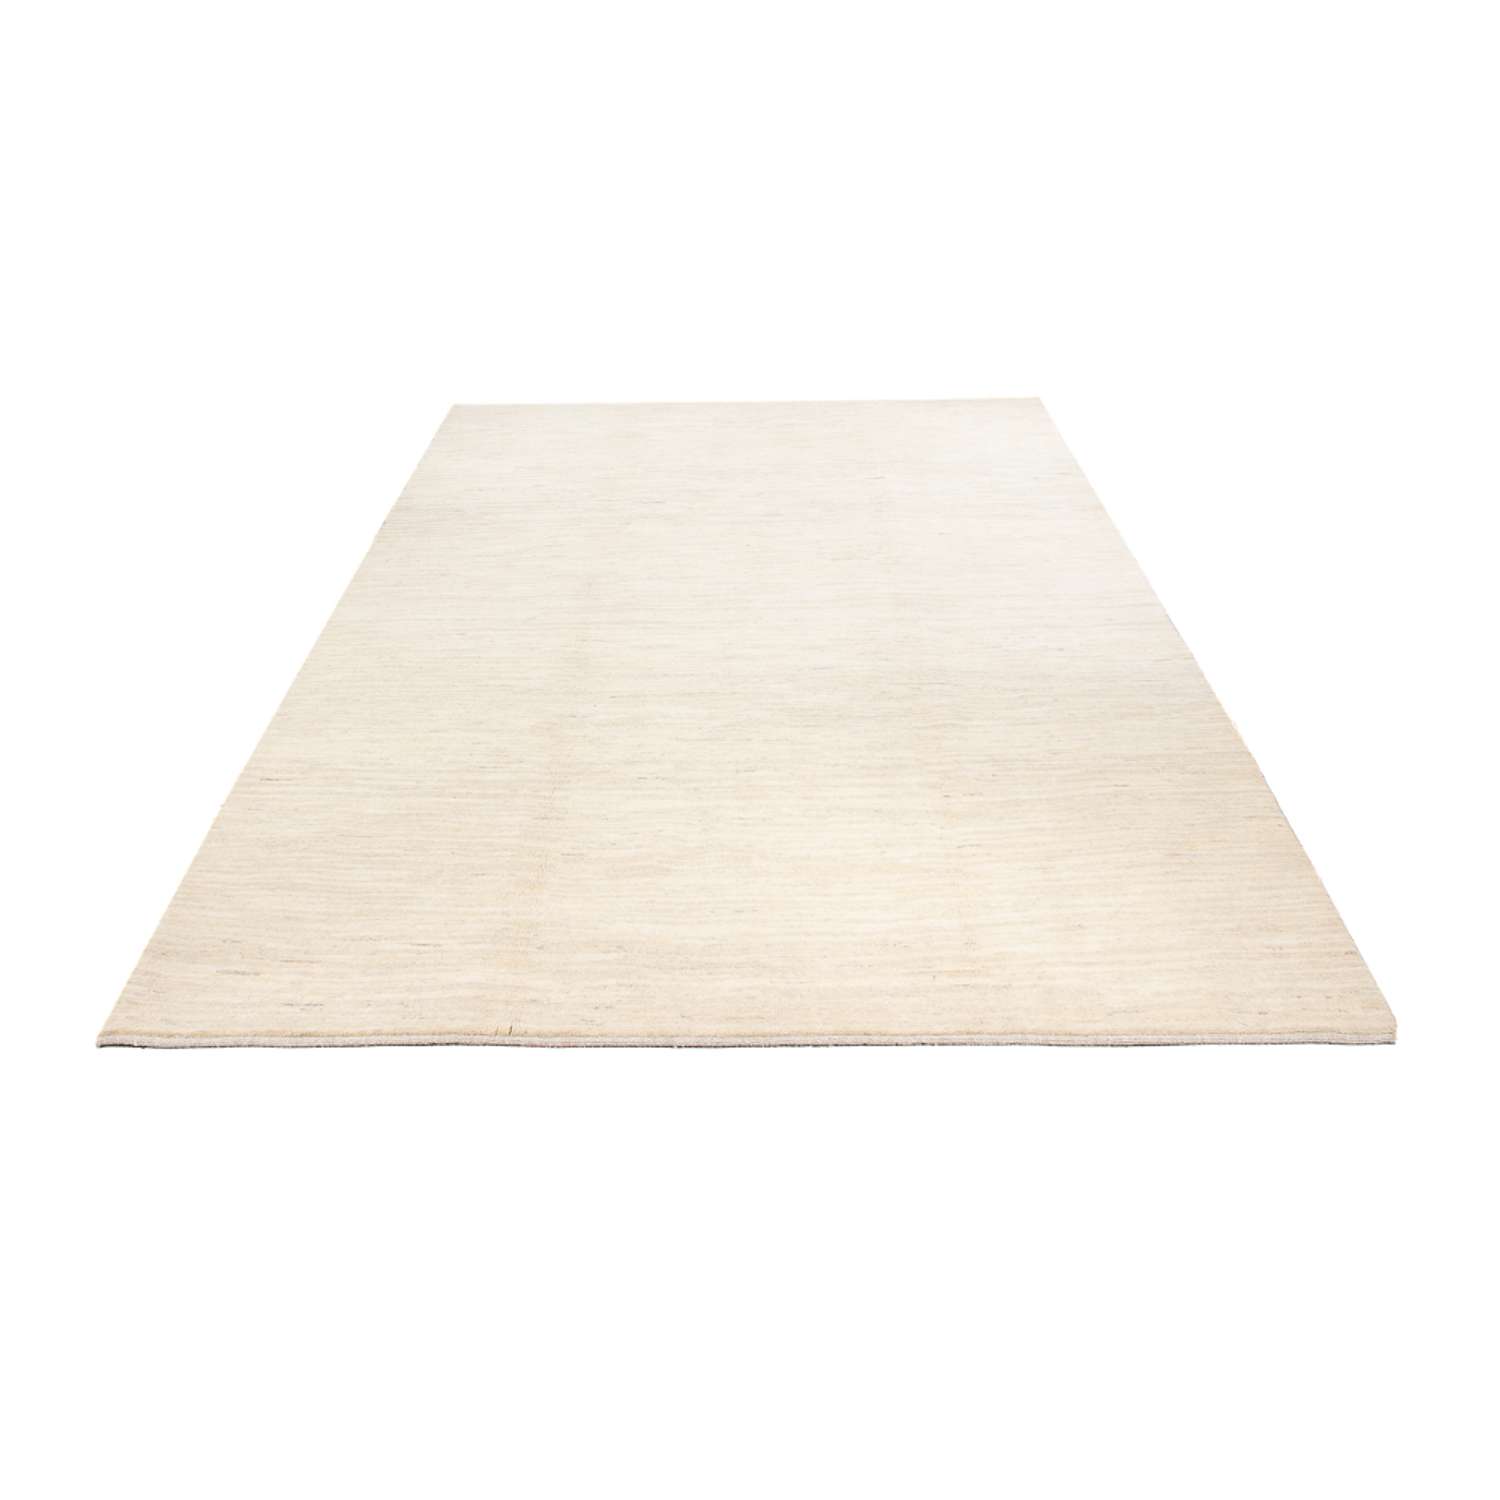 Gabbeh tapijt - Perzisch - 296 x 198 cm - wit  crème